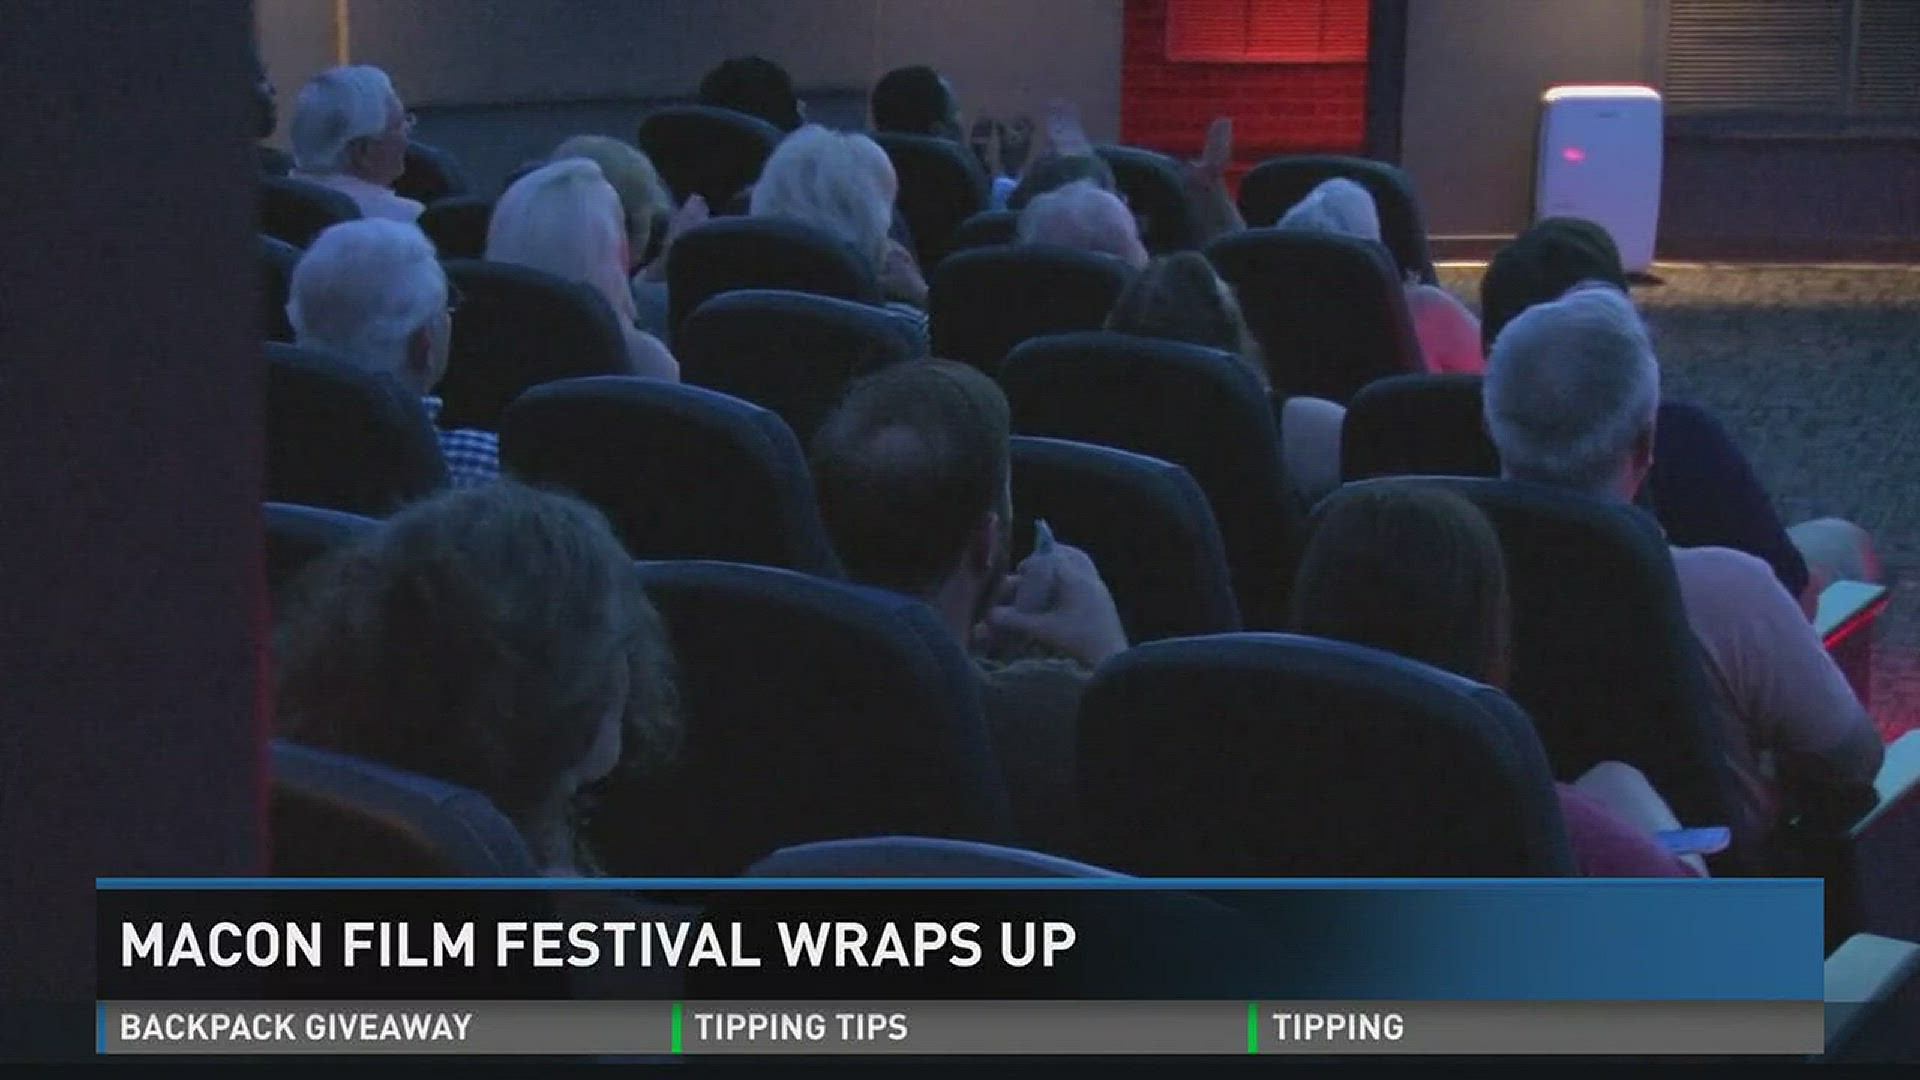 Macon Film Festival wraps up